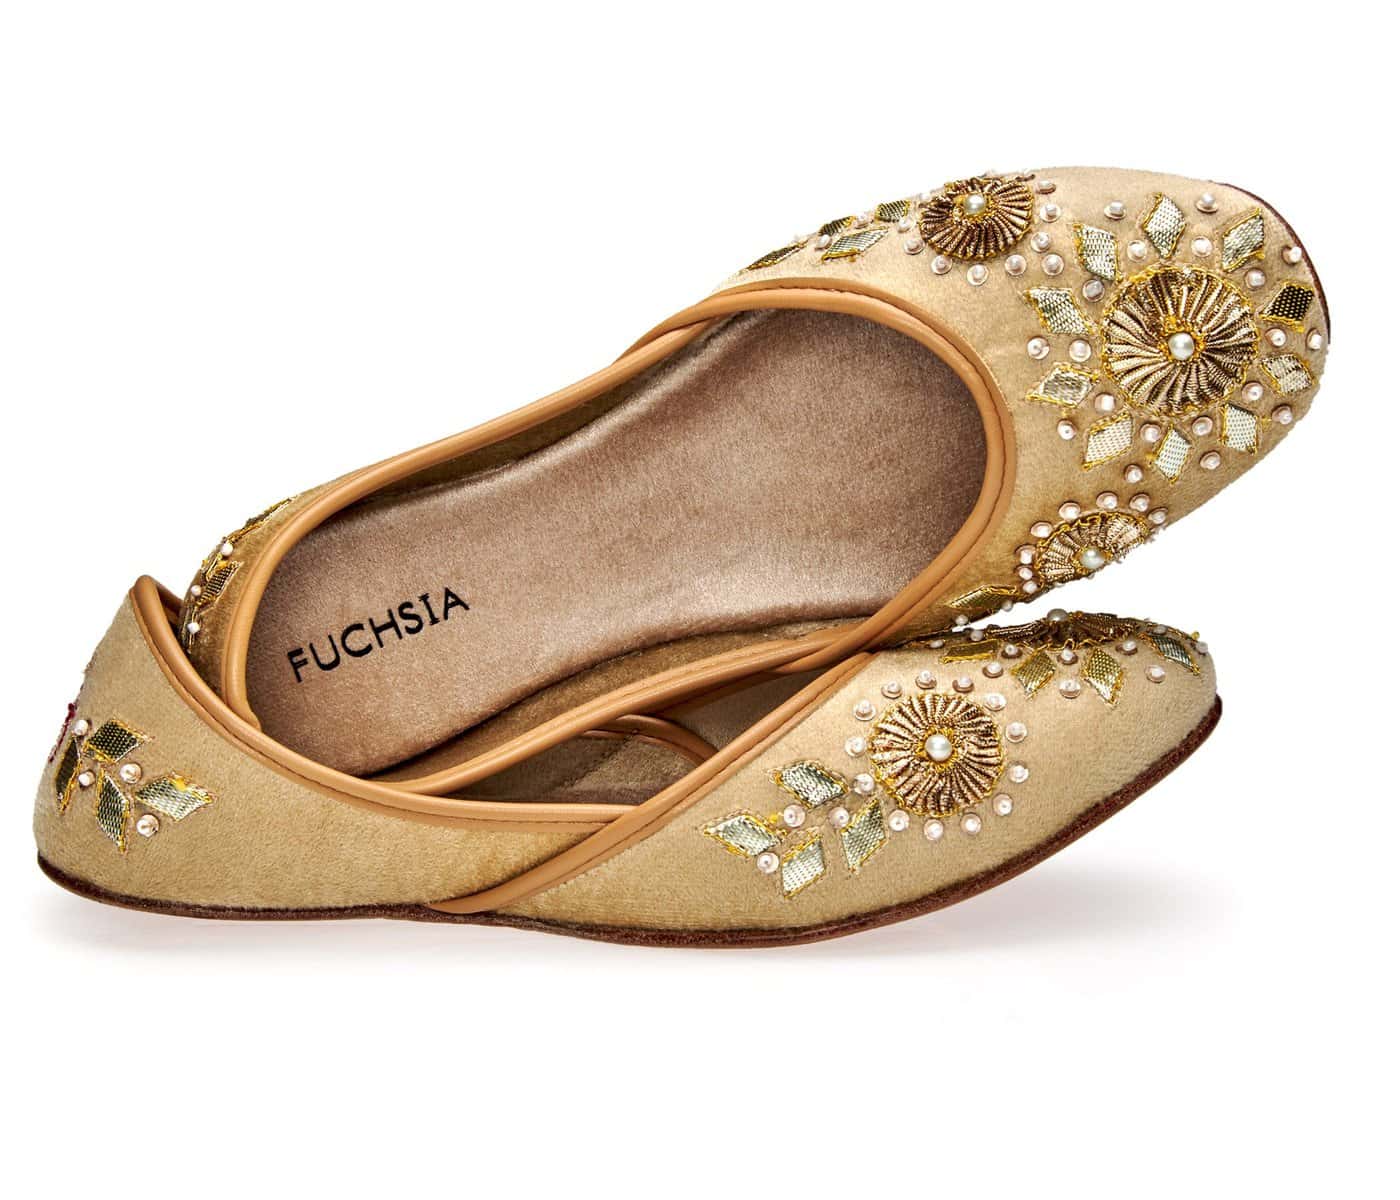 fuchsia bridal shoes